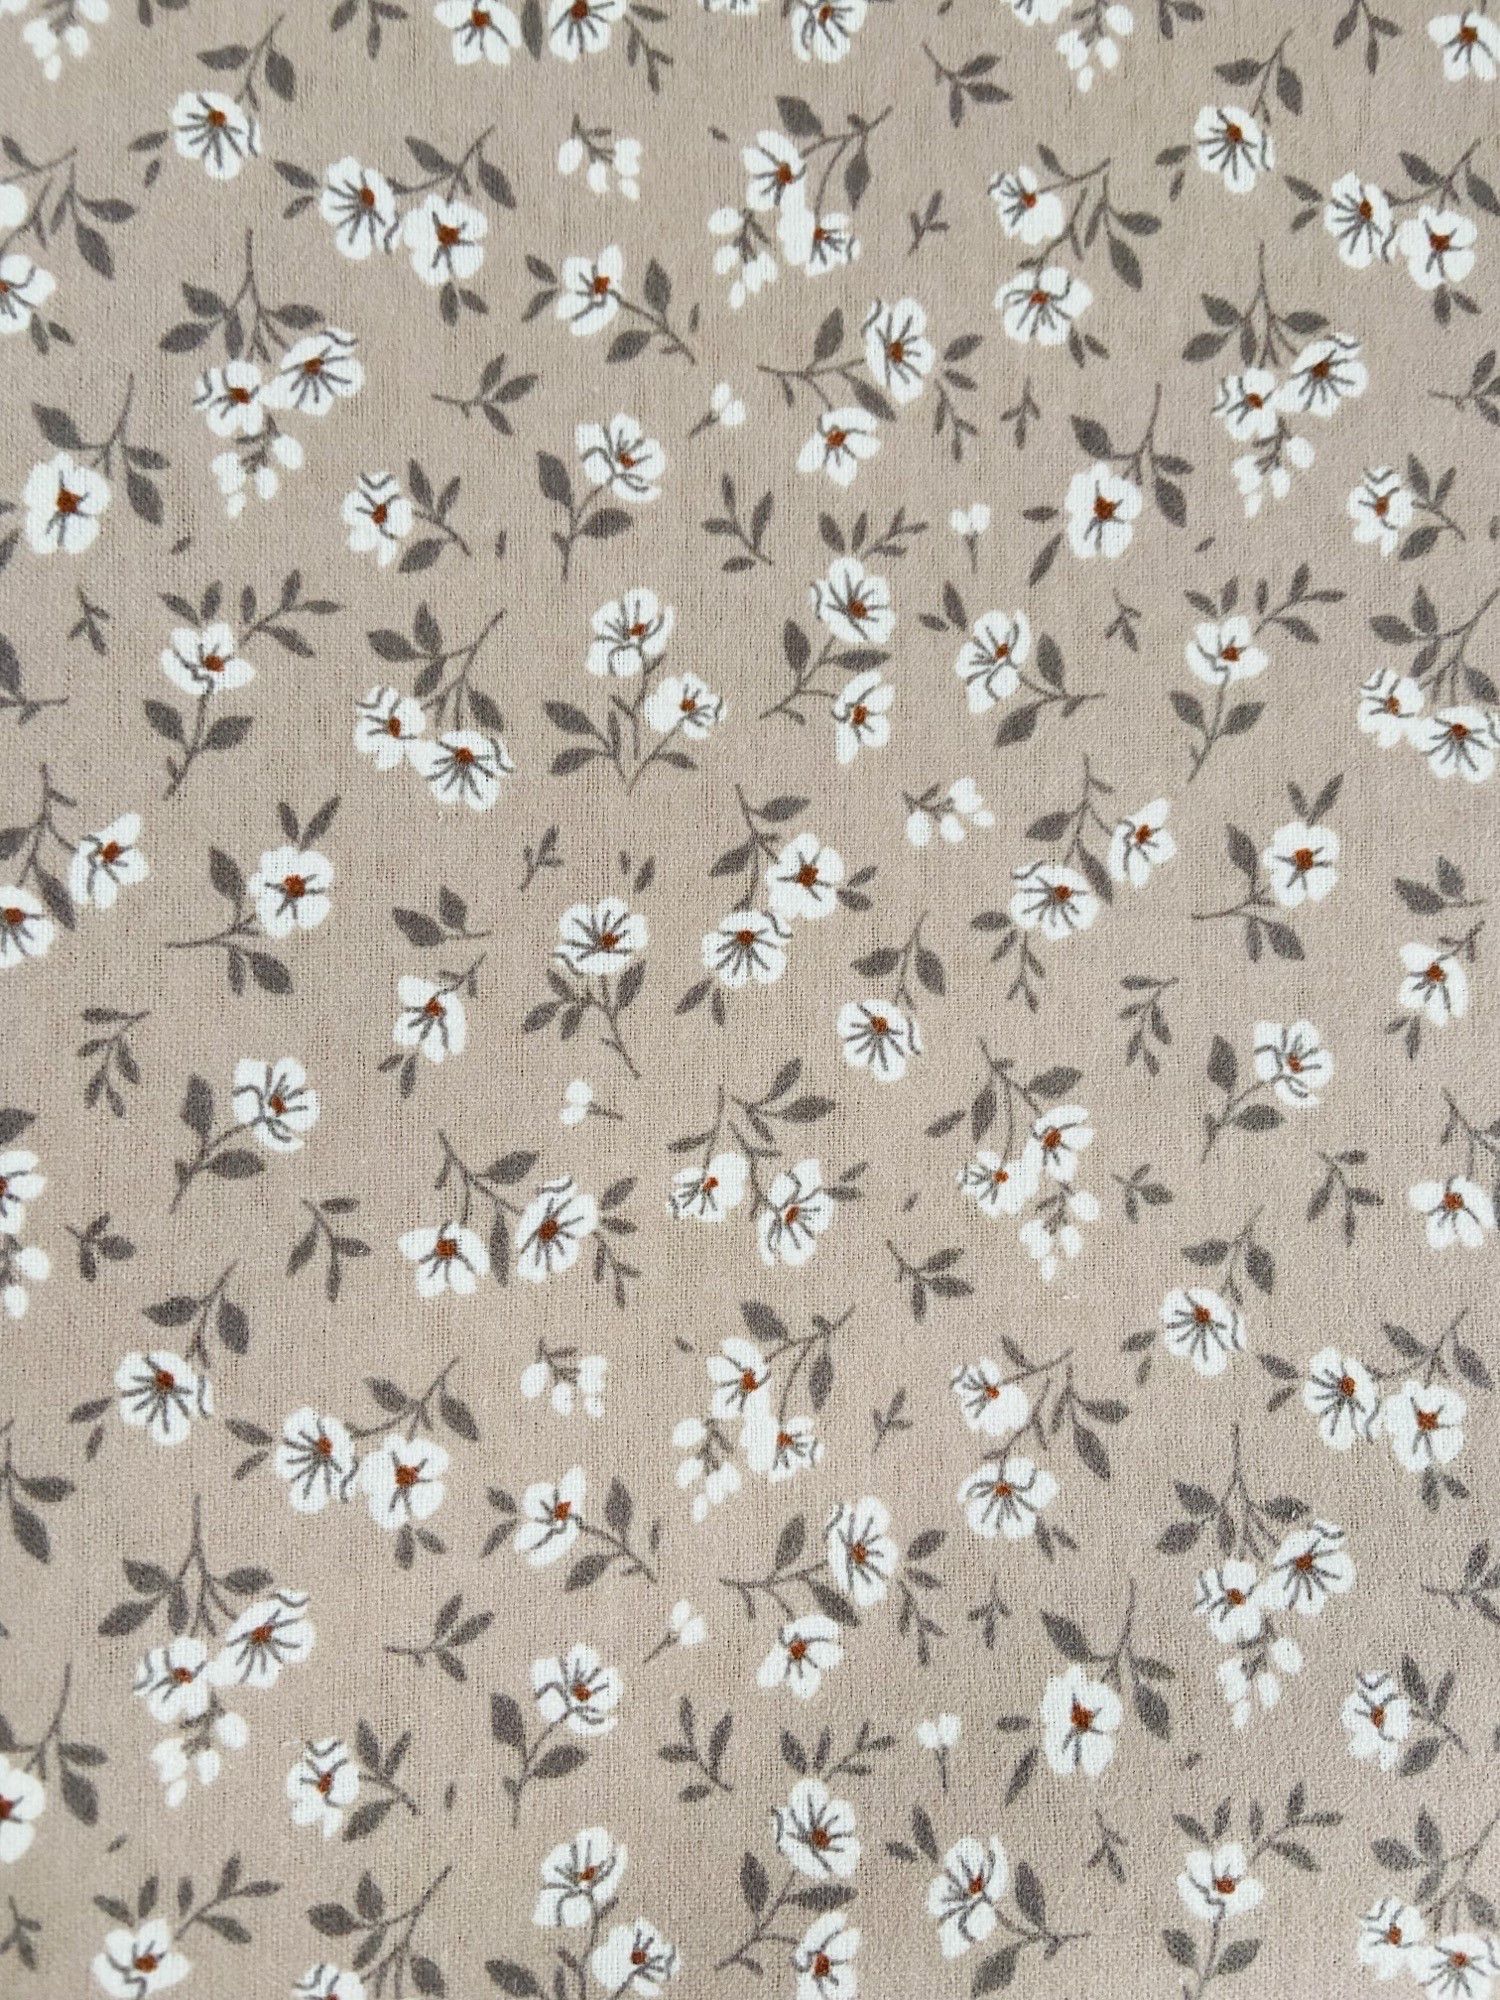 Viscount Textiles Brushed Cotton Floral Fabric, Beige